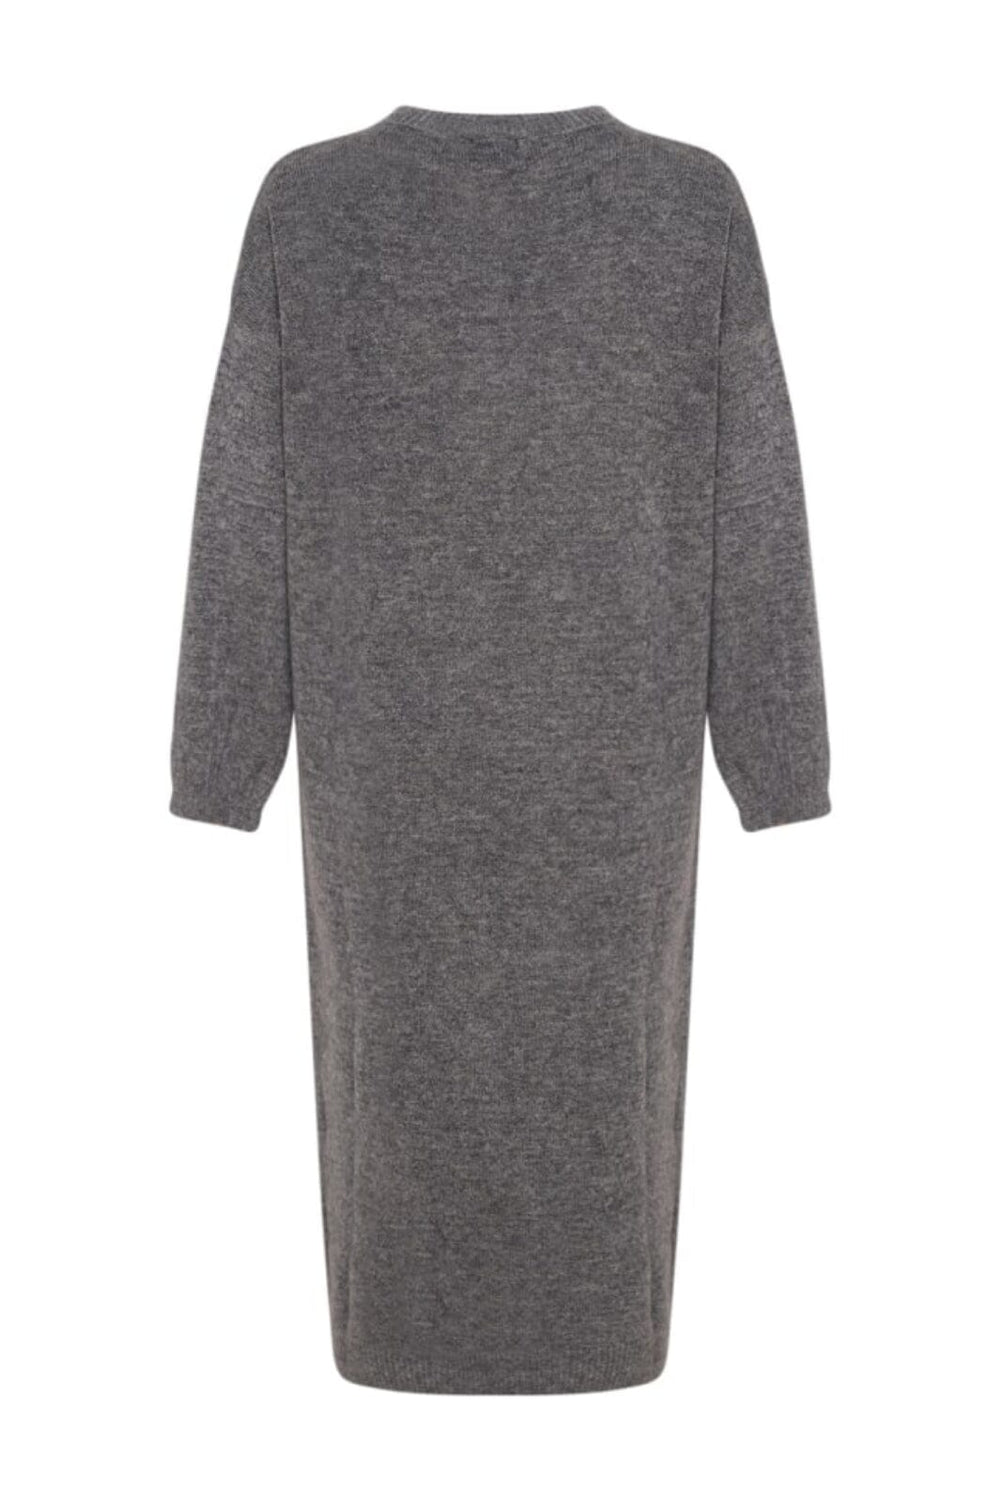 Noella - Penn Knit Dress - Dark Grey Melange 